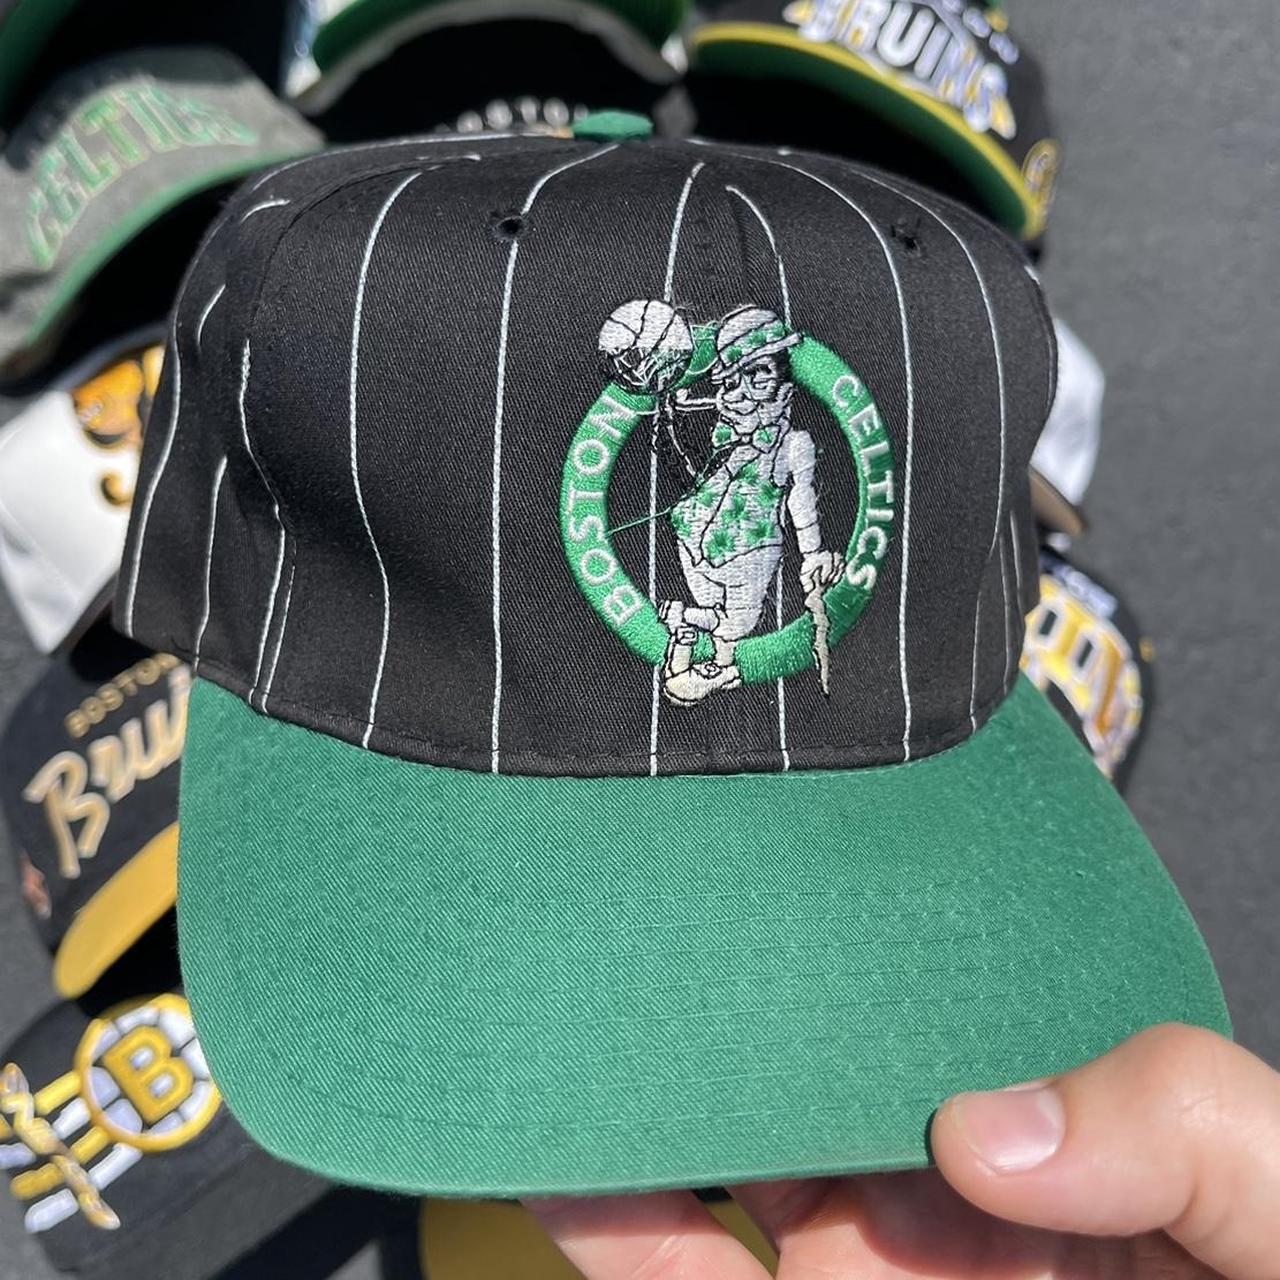 Boston Celtics NBA Adidas Throwback Logo Snapback Hat